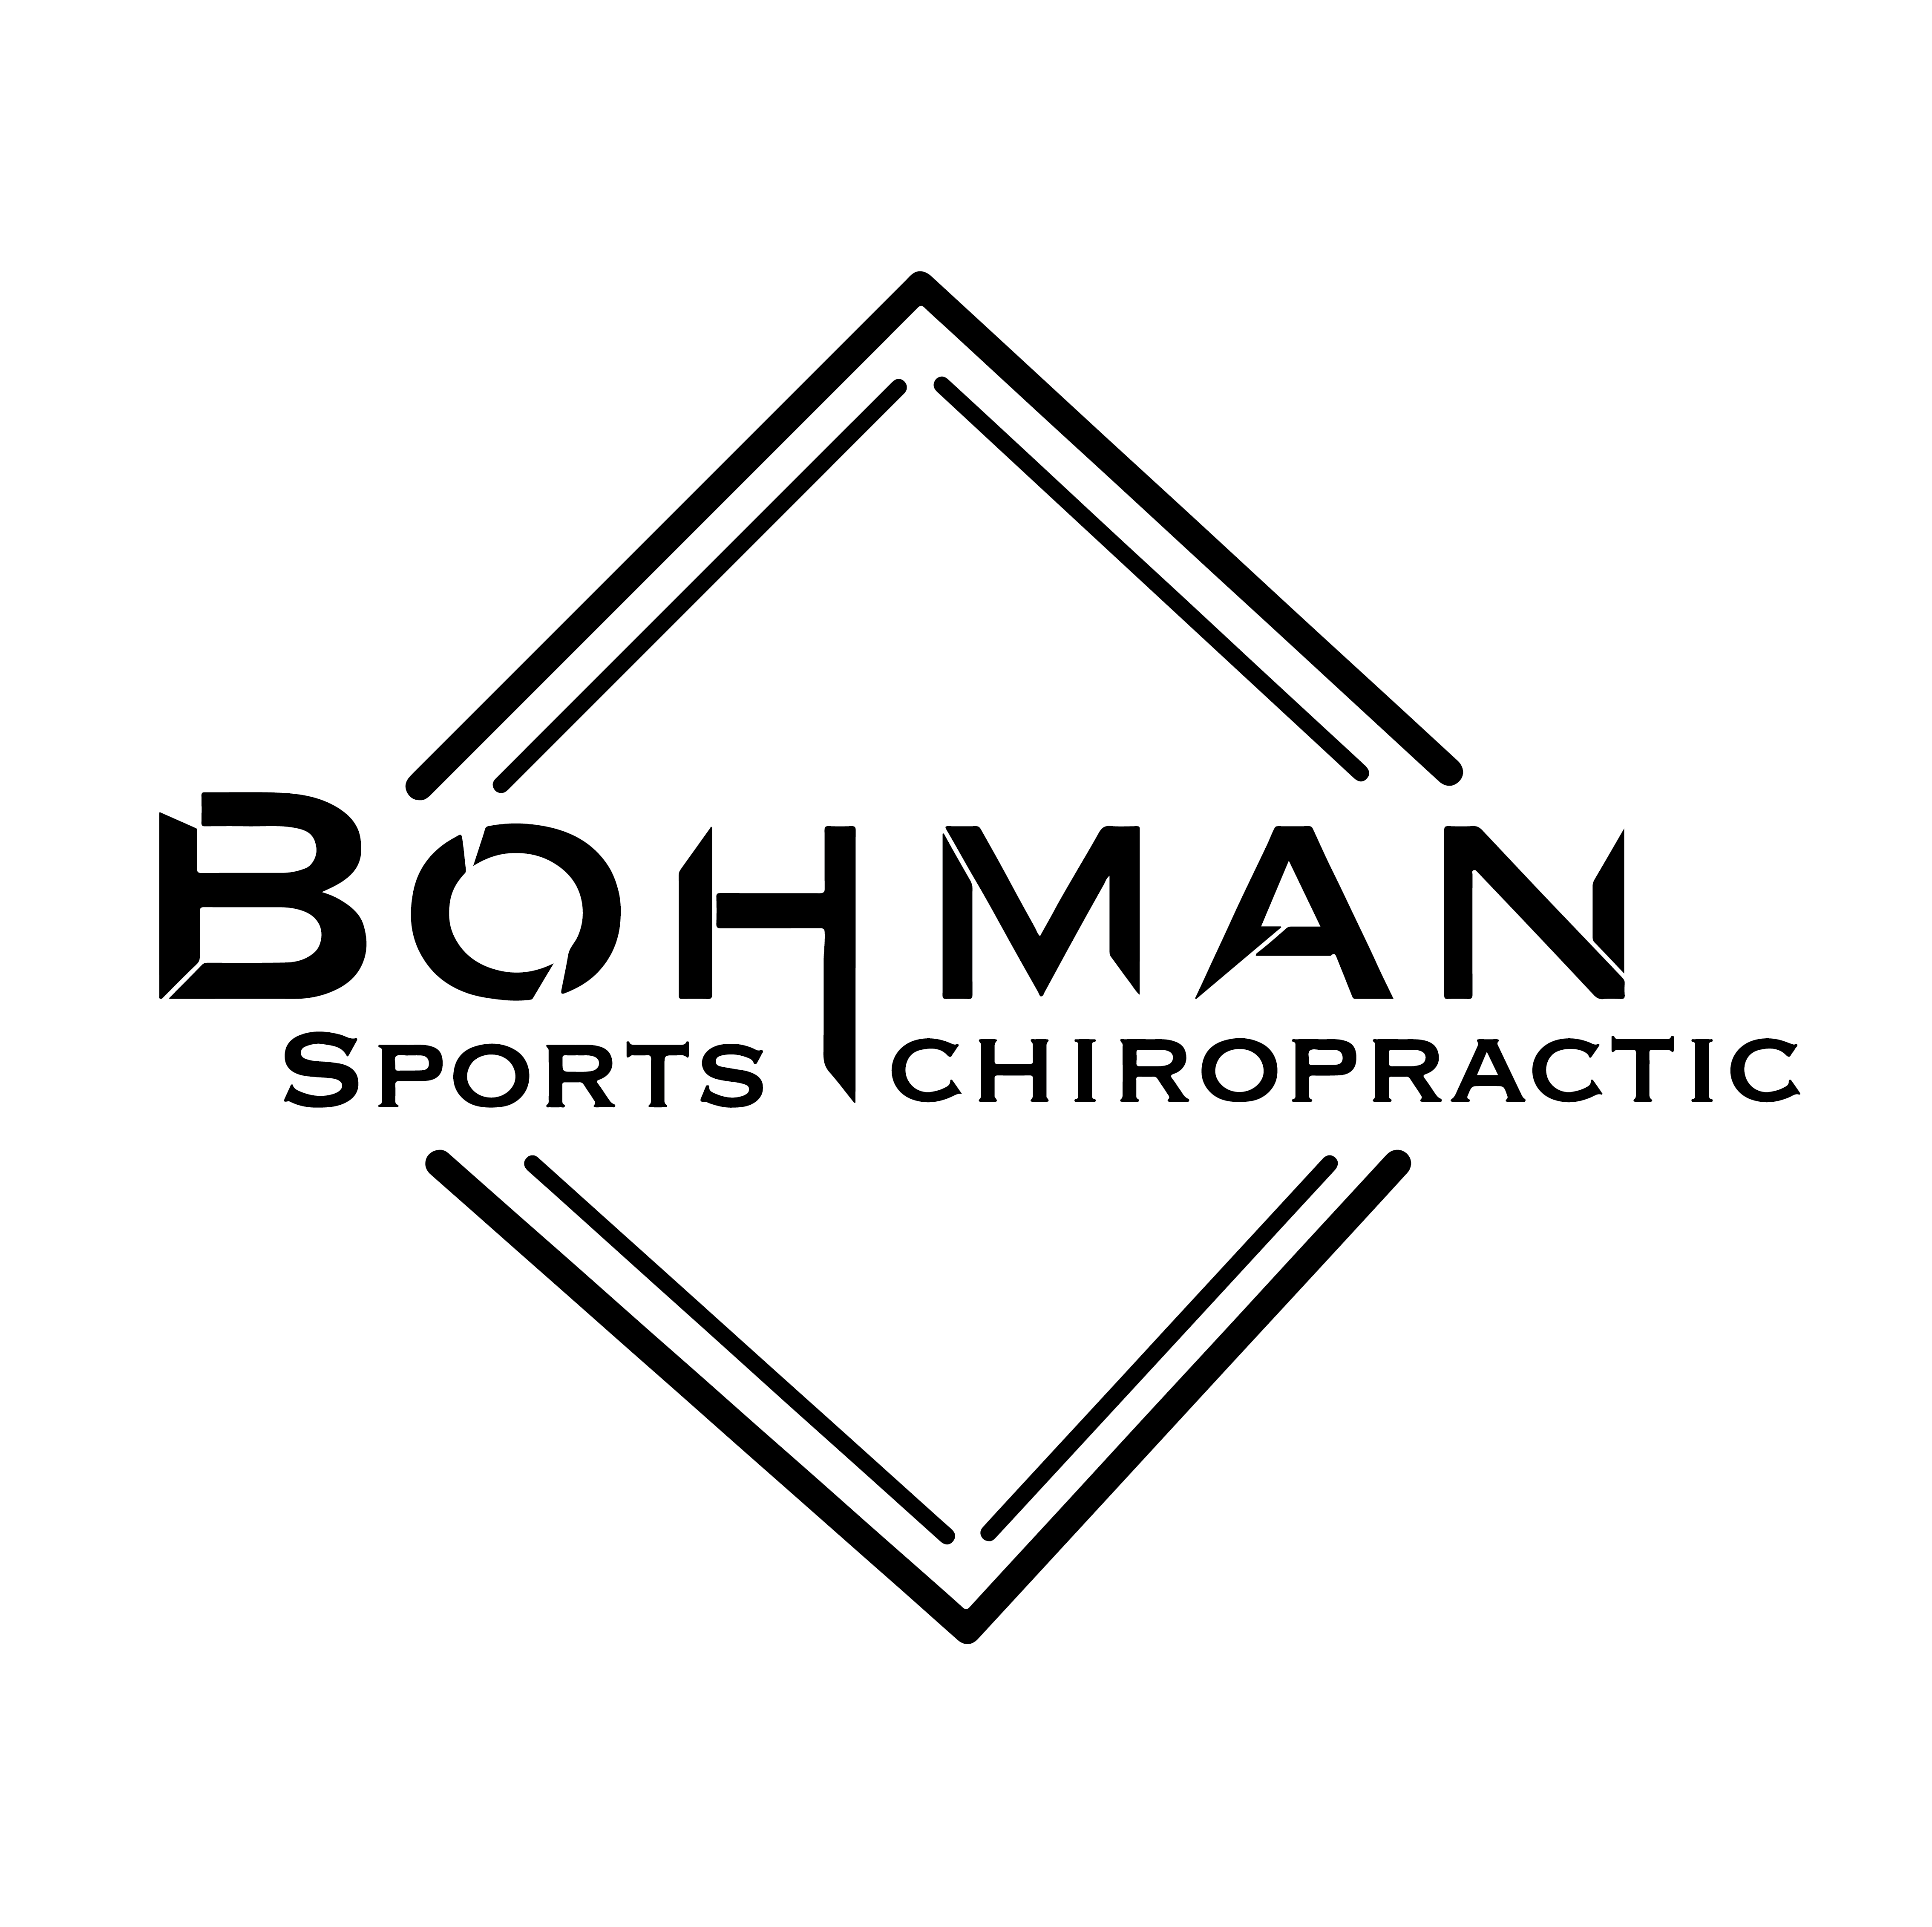 Bohman Sports Chiro black logo wt background.